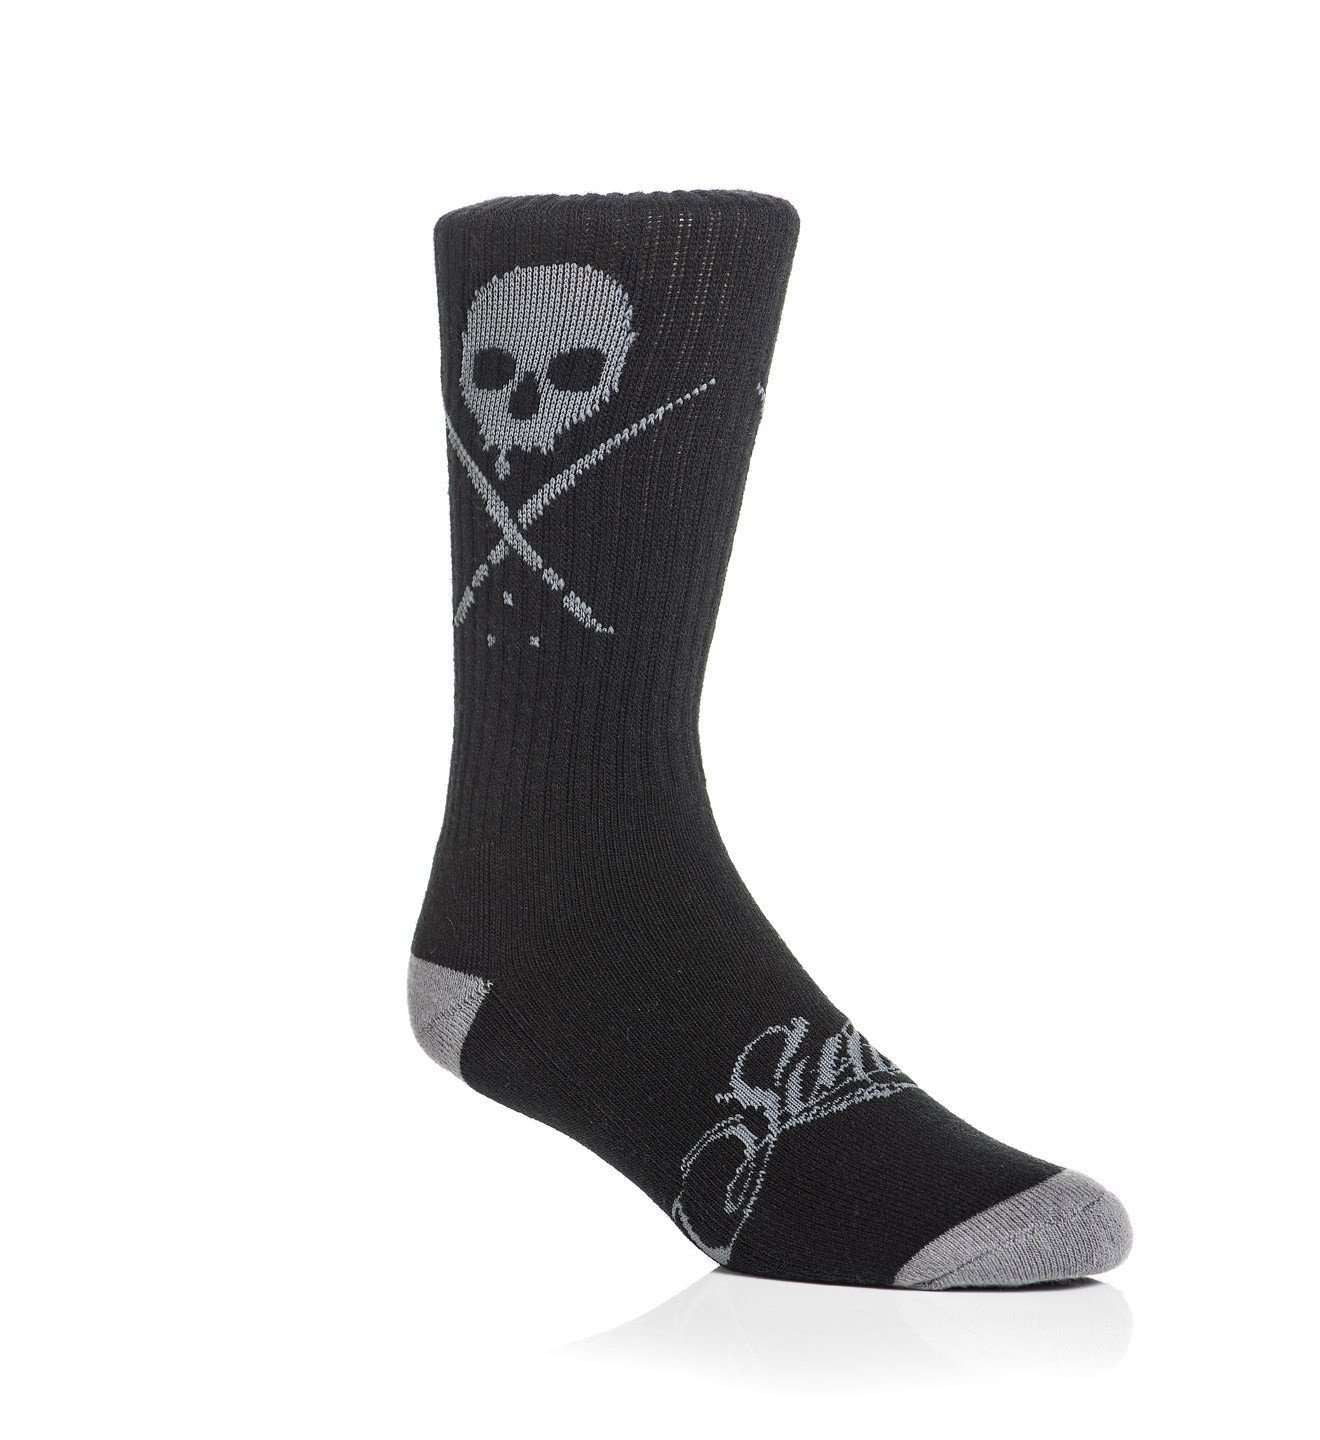 Standard Issue Socks Black/Gray - 